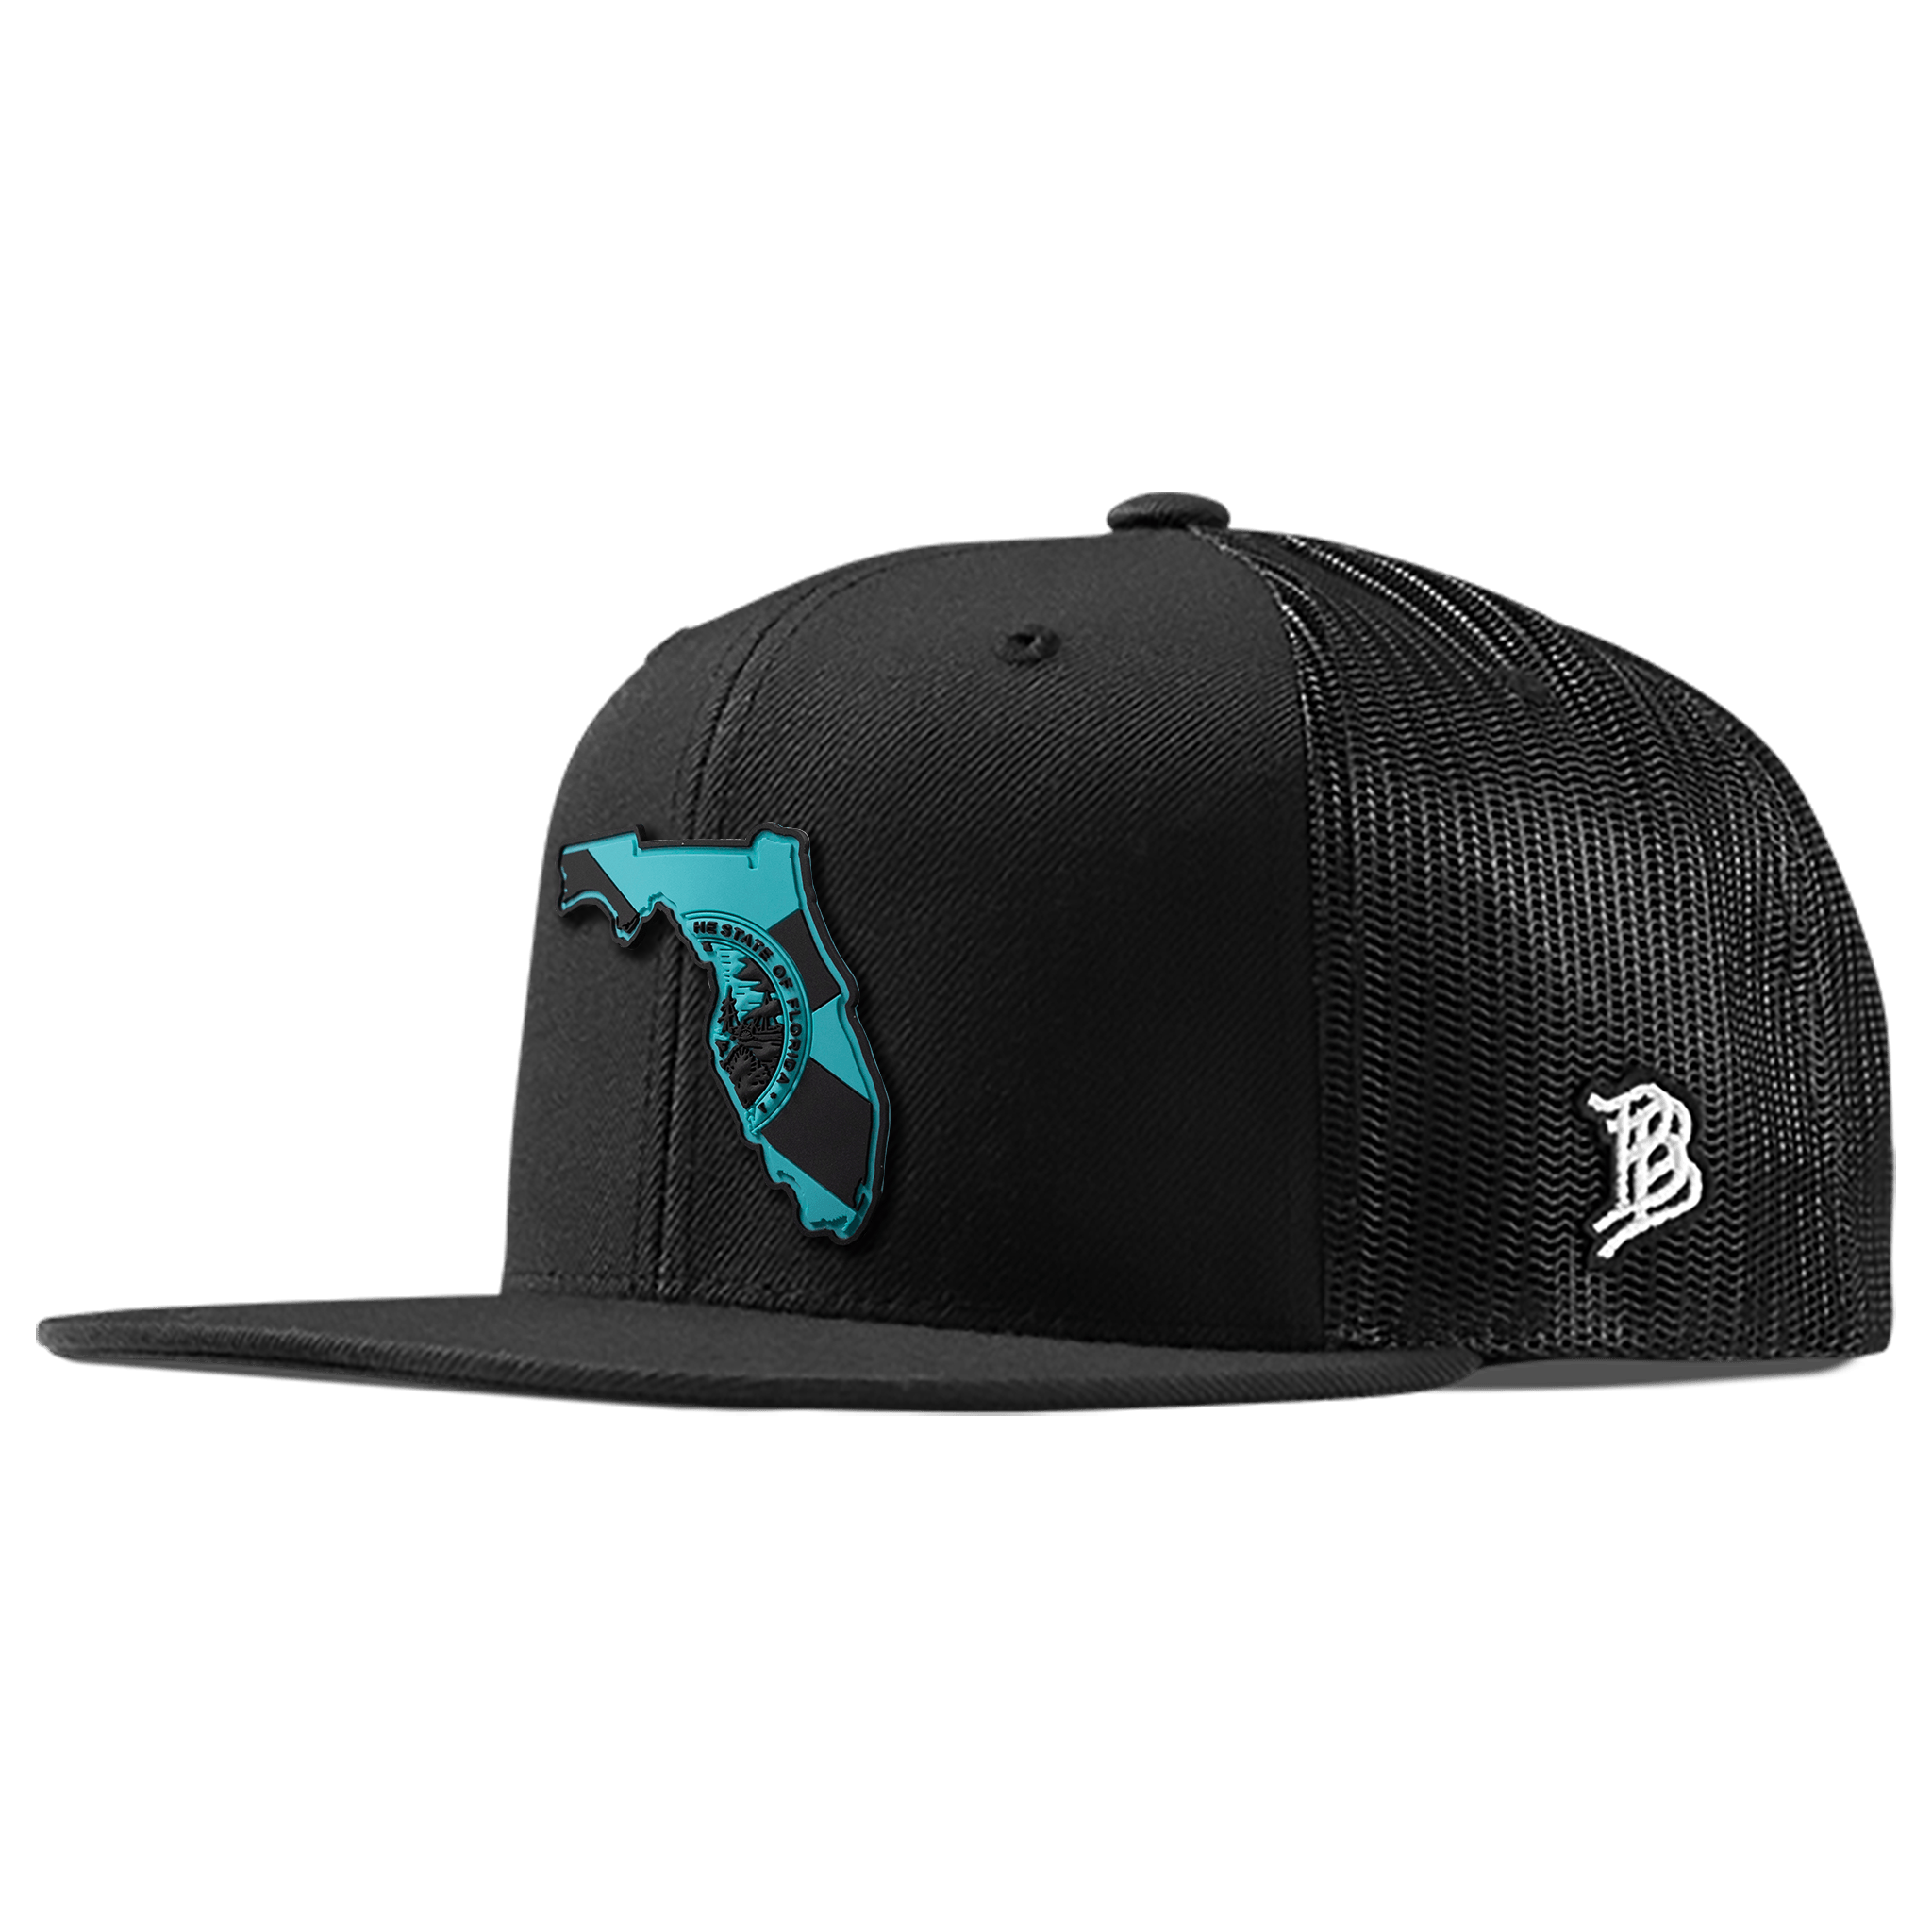 Wikjxiz Don't New York My Florida Hats for Men Women Adjustable Flat Bill  Brim Dad Hats Hip Hop Baseball Cap Black